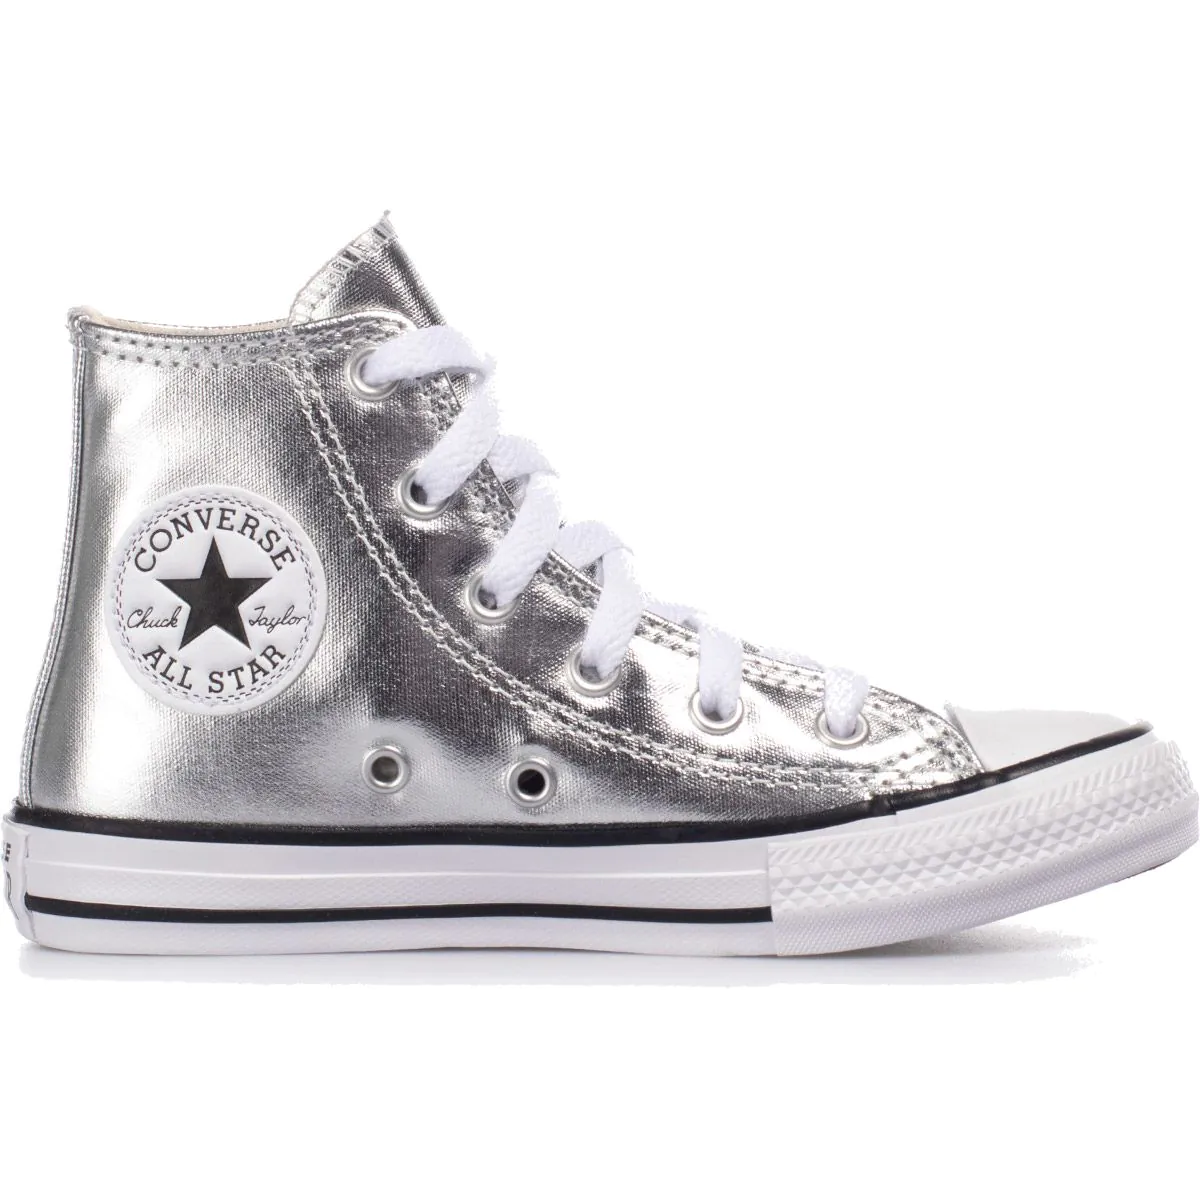 Converse Chuck Taylor All Star High Top Kid's Shoe 670179C